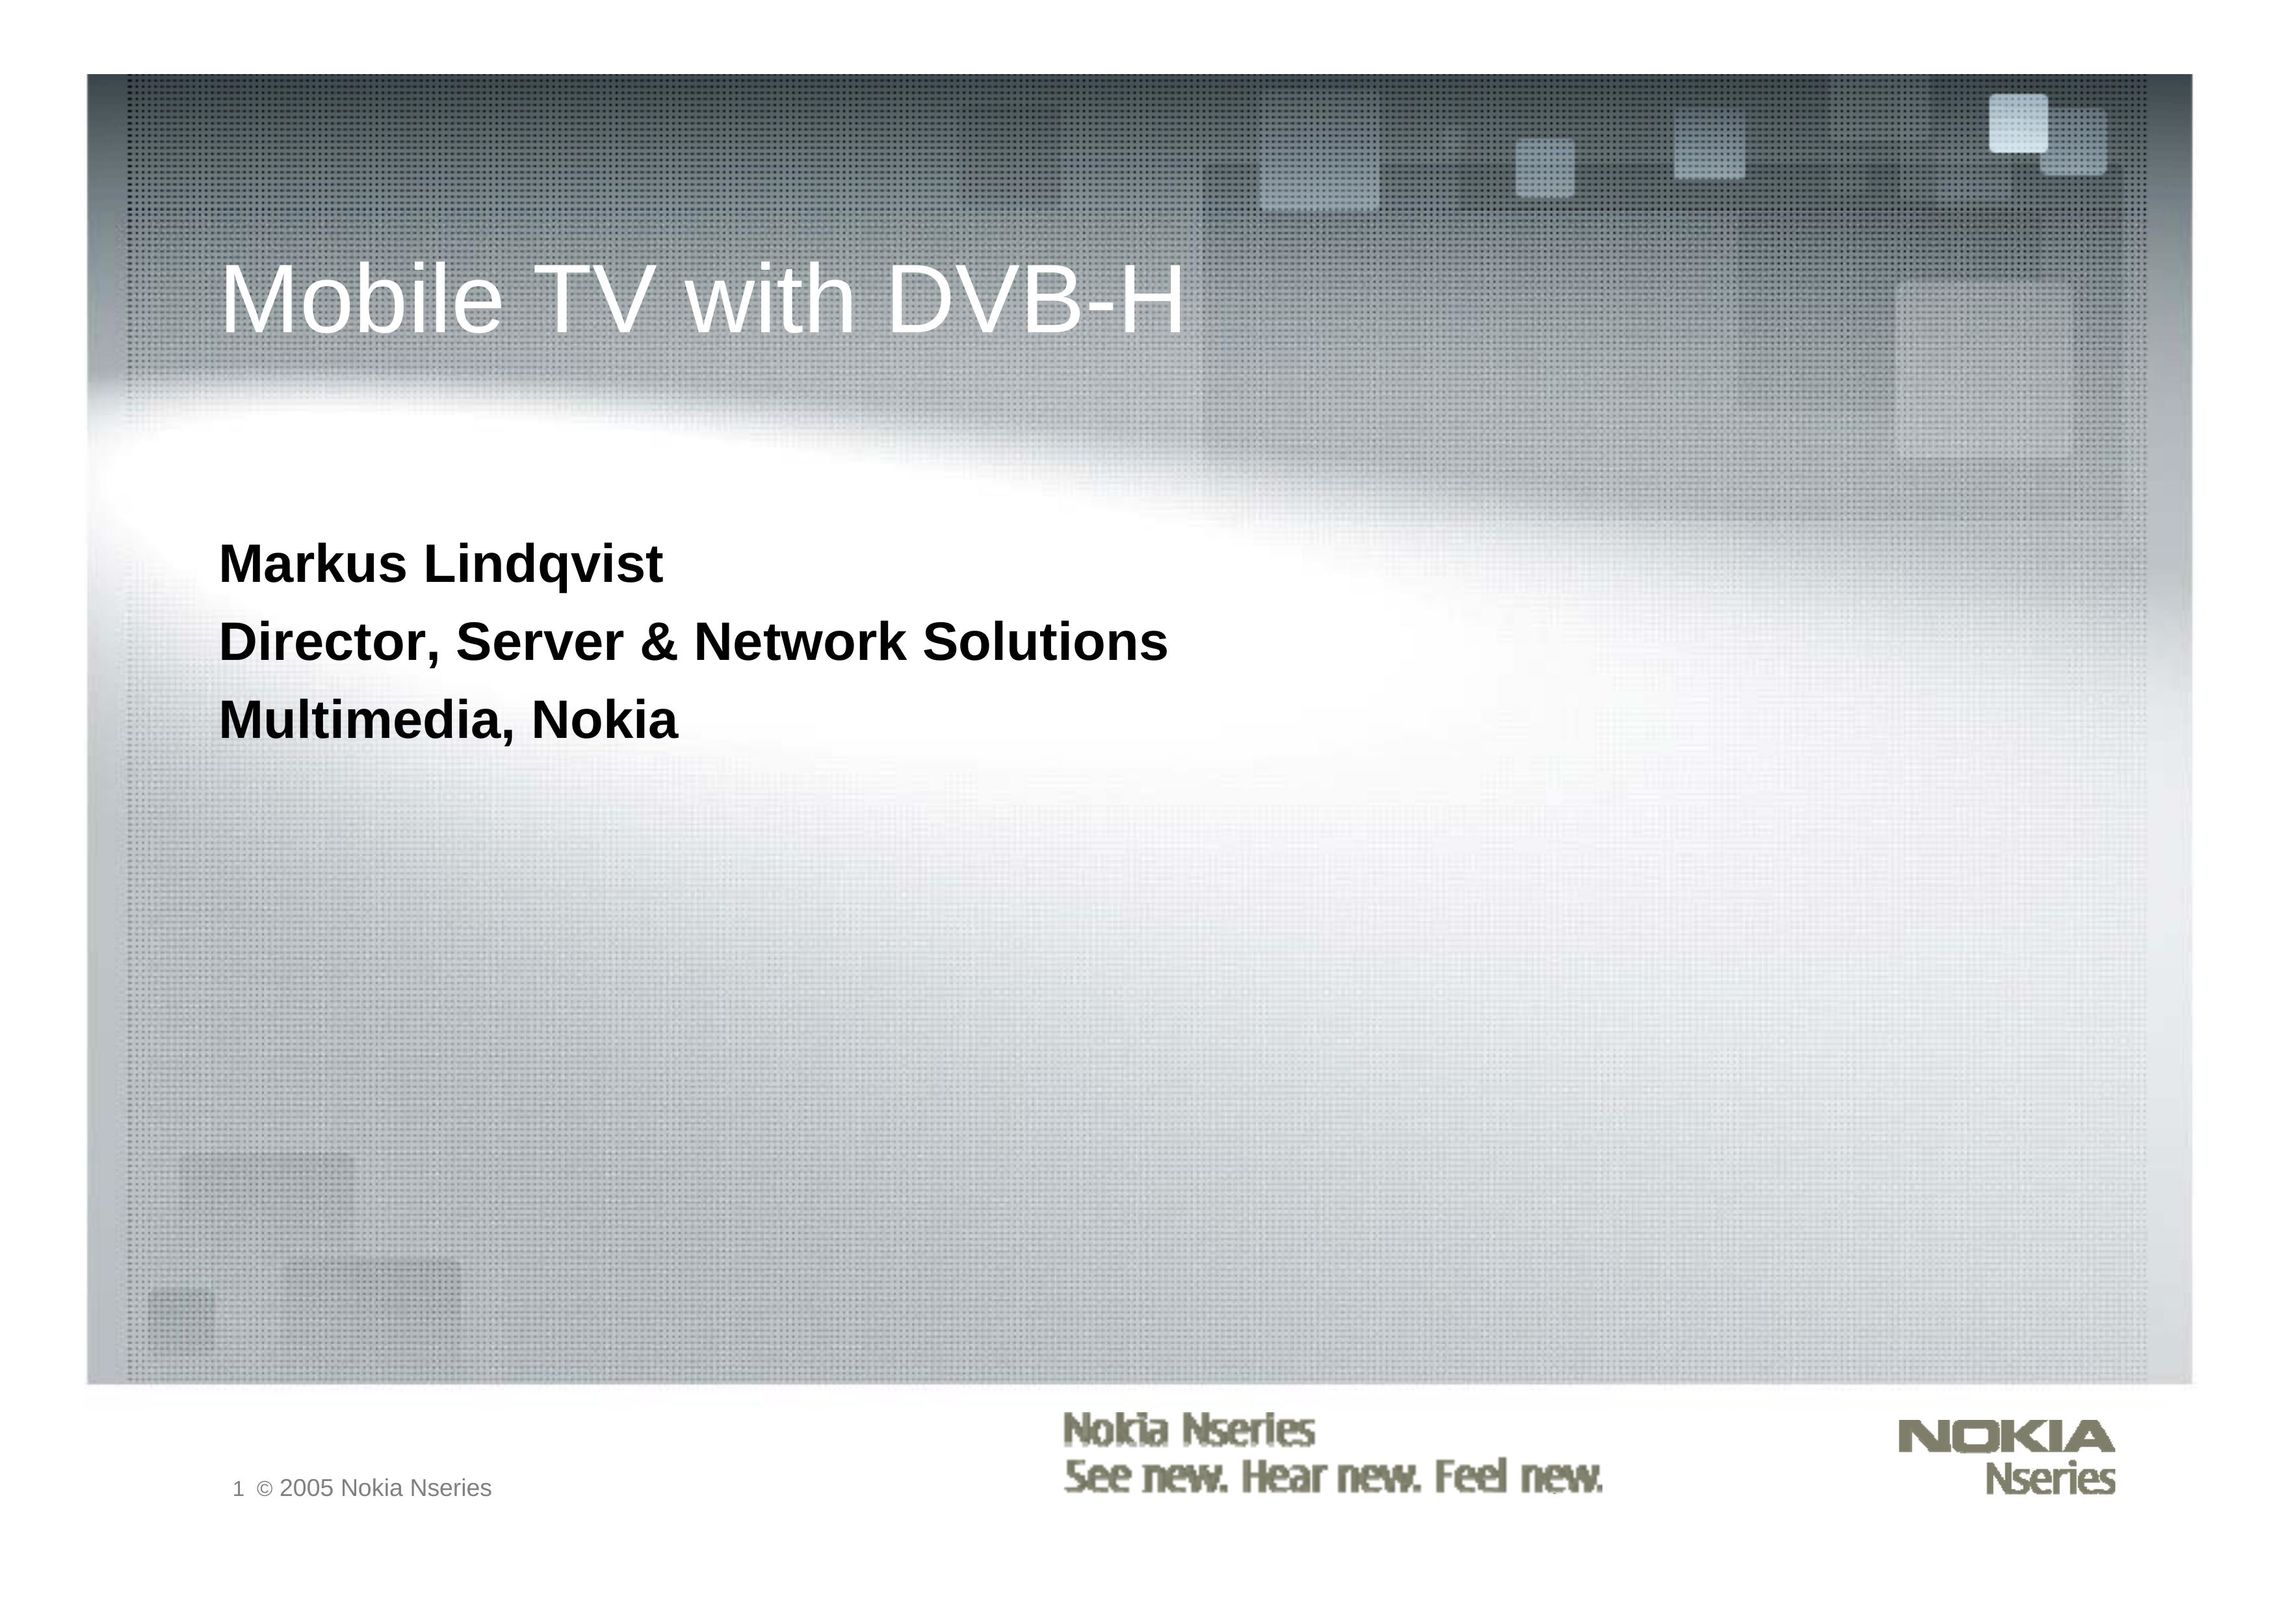 Nokia Nseries Car Satellite TV System User Manual